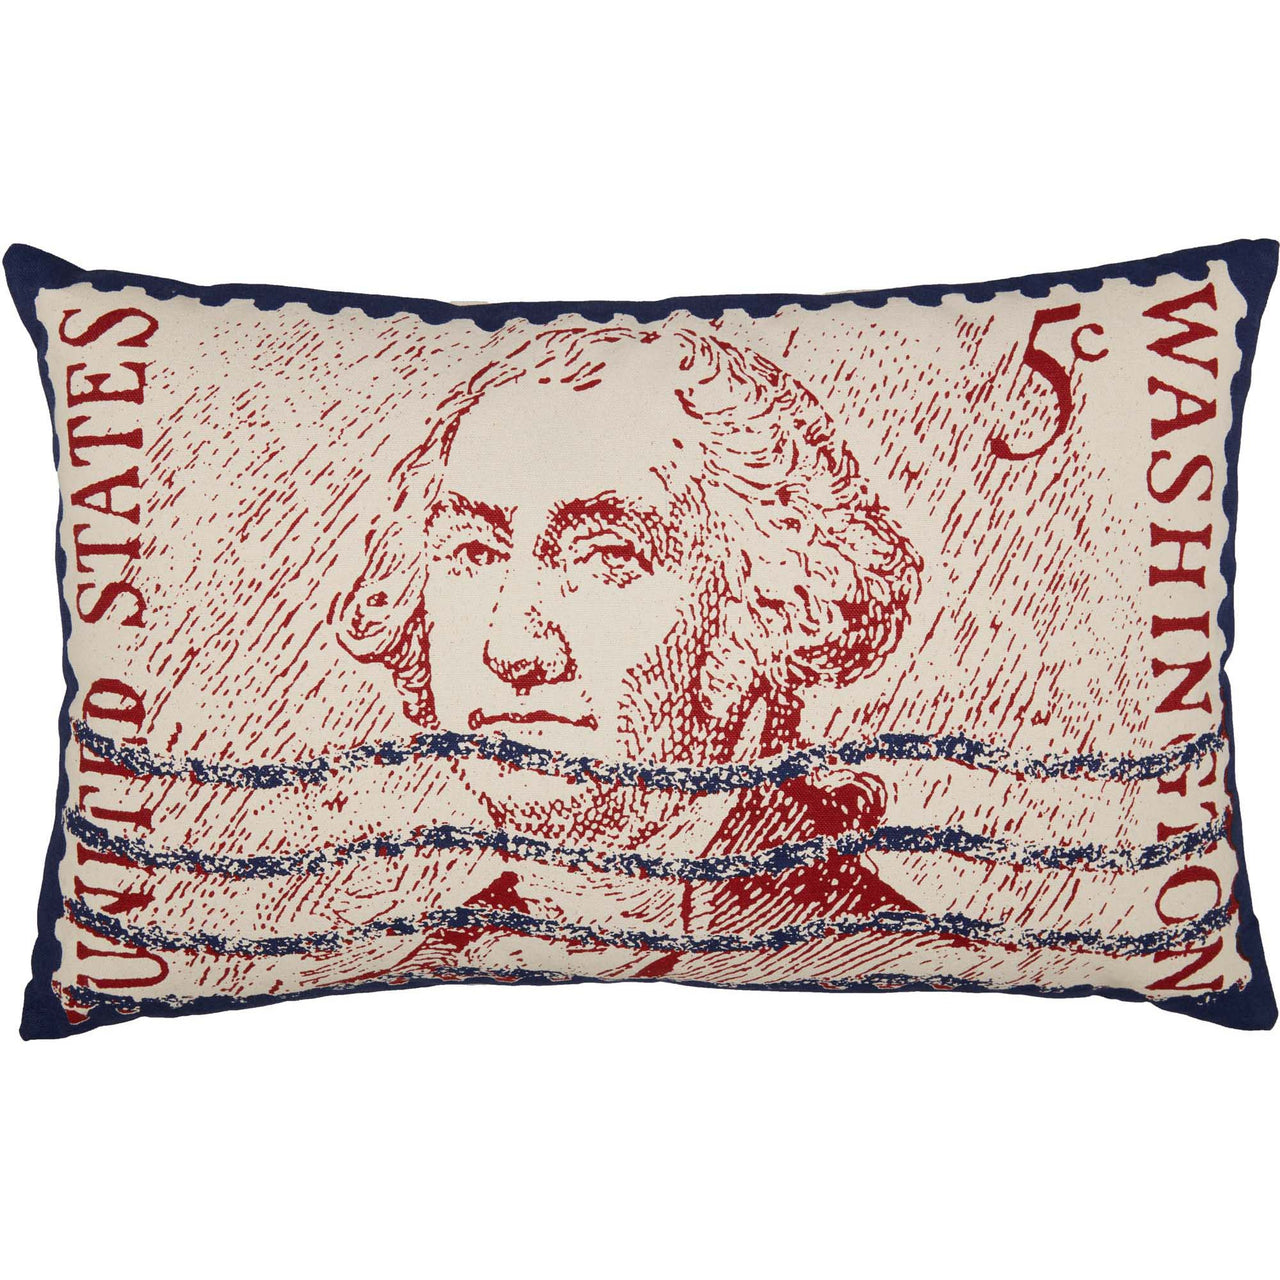 George Washington Pillow 14x22 VHC Brands